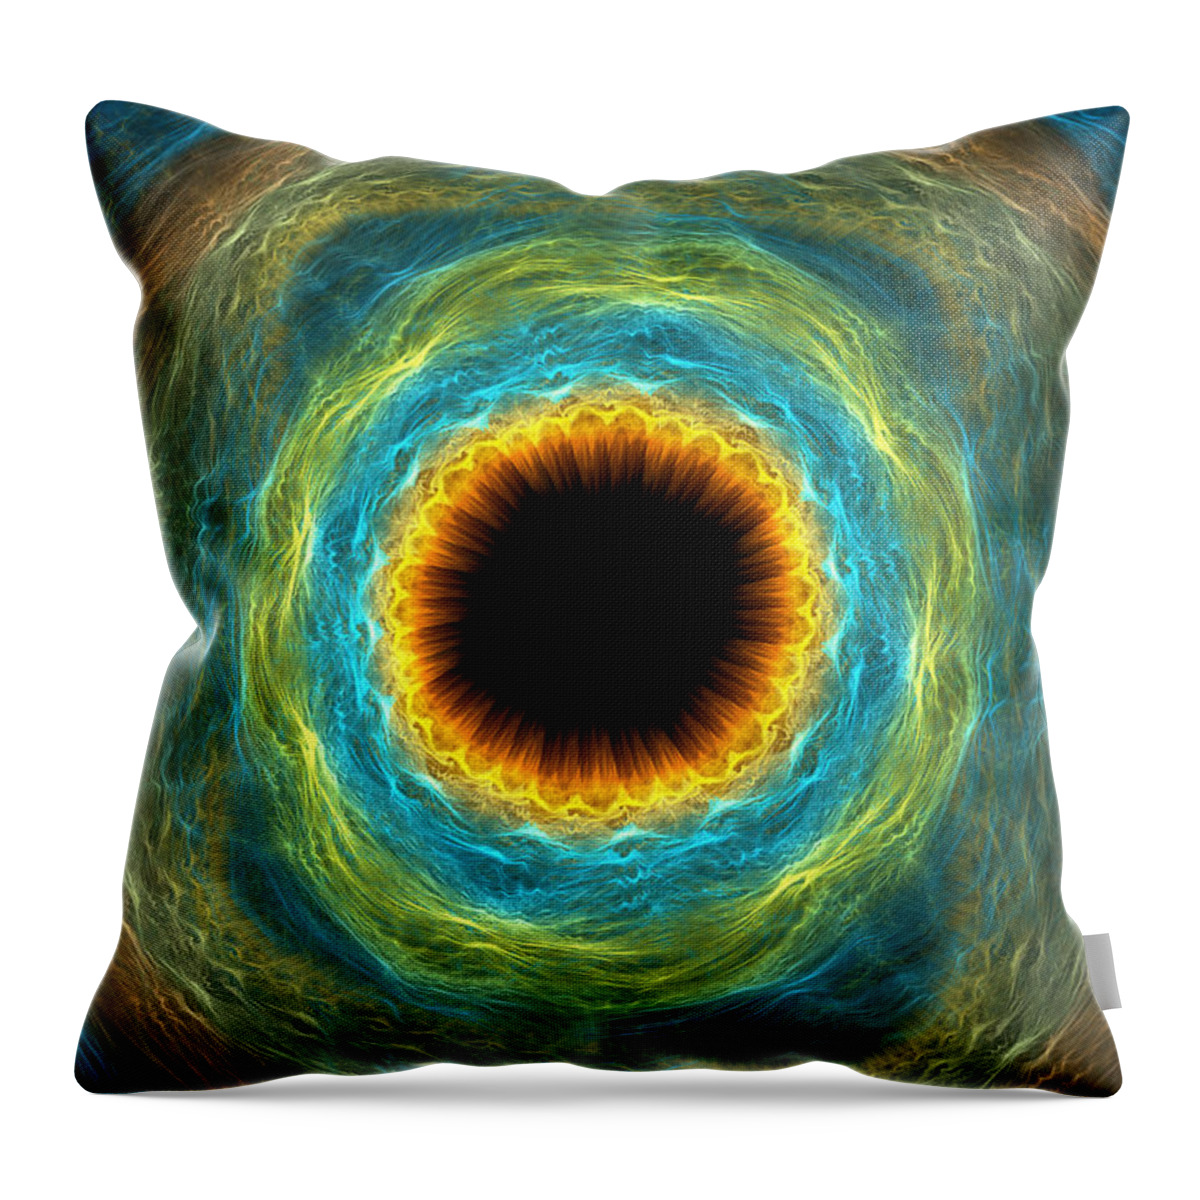 Eye Throw Pillow featuring the digital art Eye iris by Martin Capek